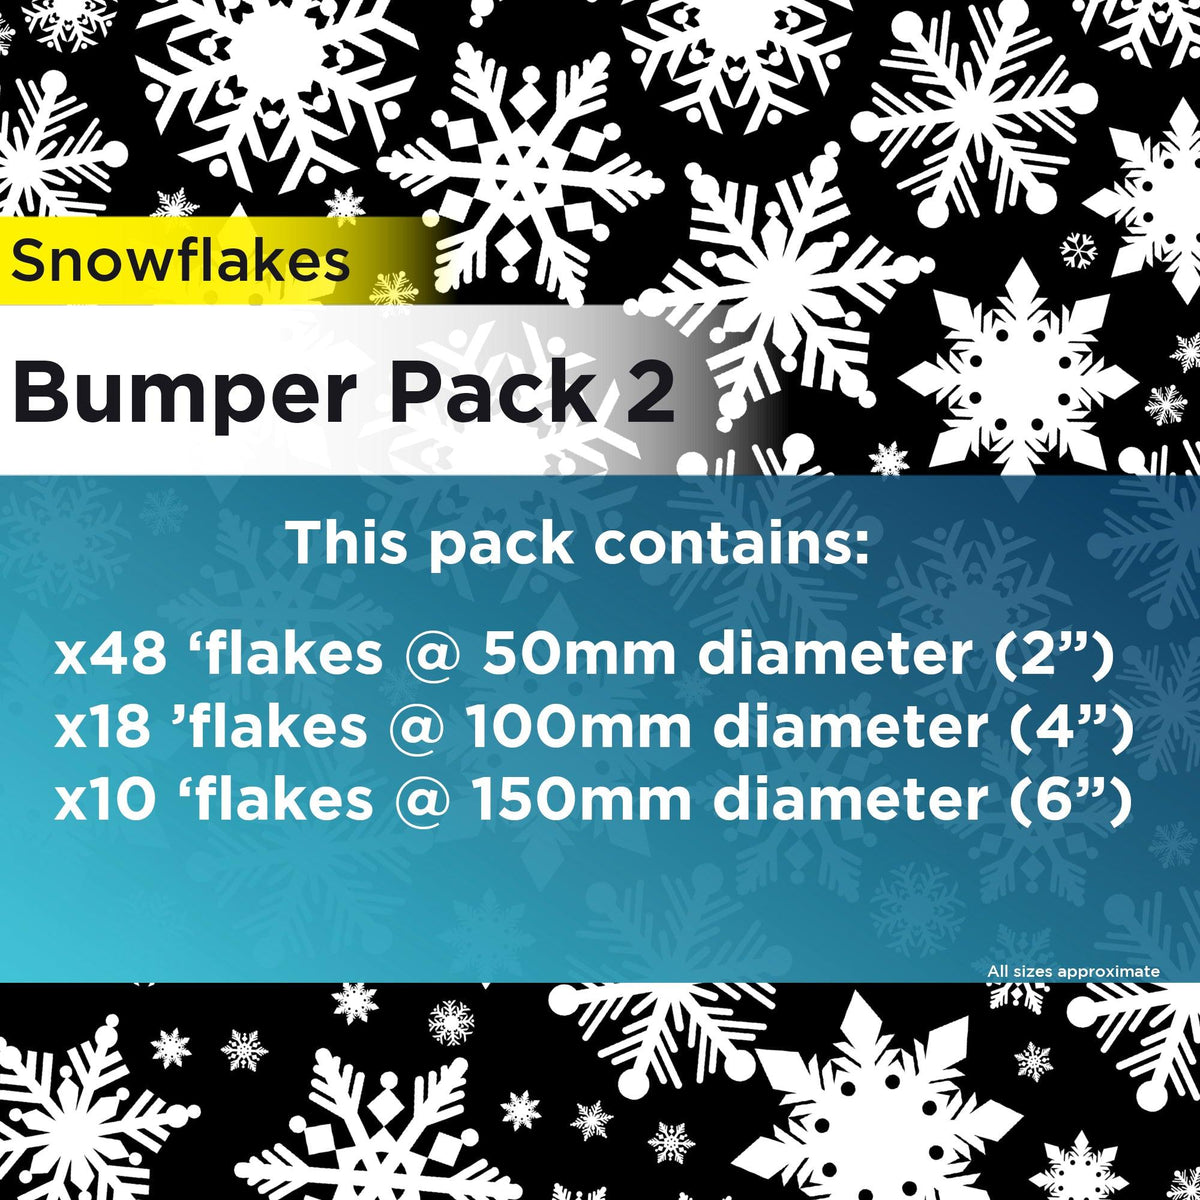 Snowflake Window Stickers: Bumper Pack 2 Christmas Window Display